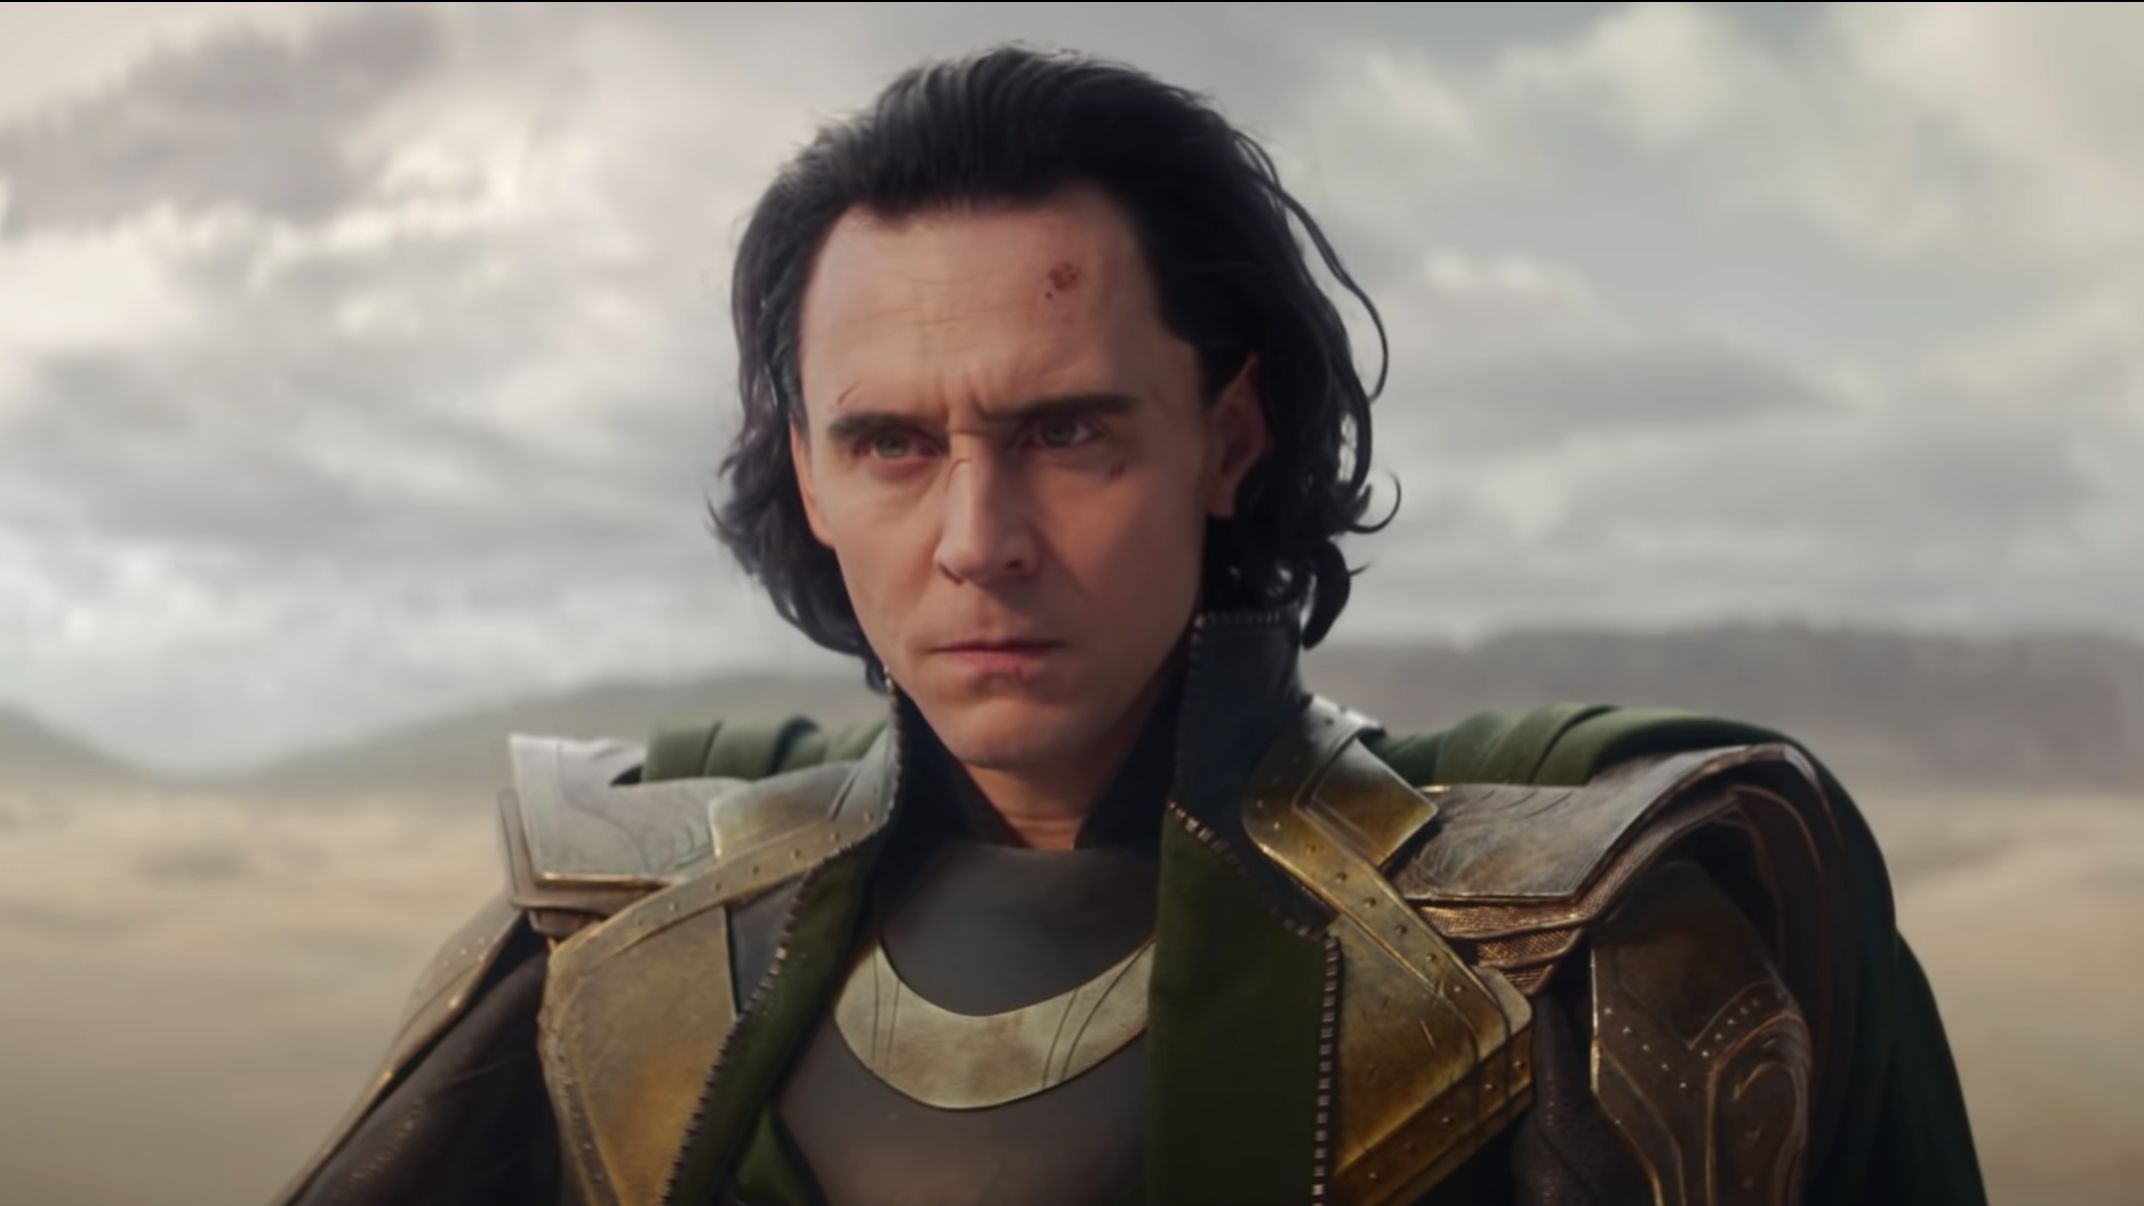 How to Watch Loki Season 1 on Disney+?